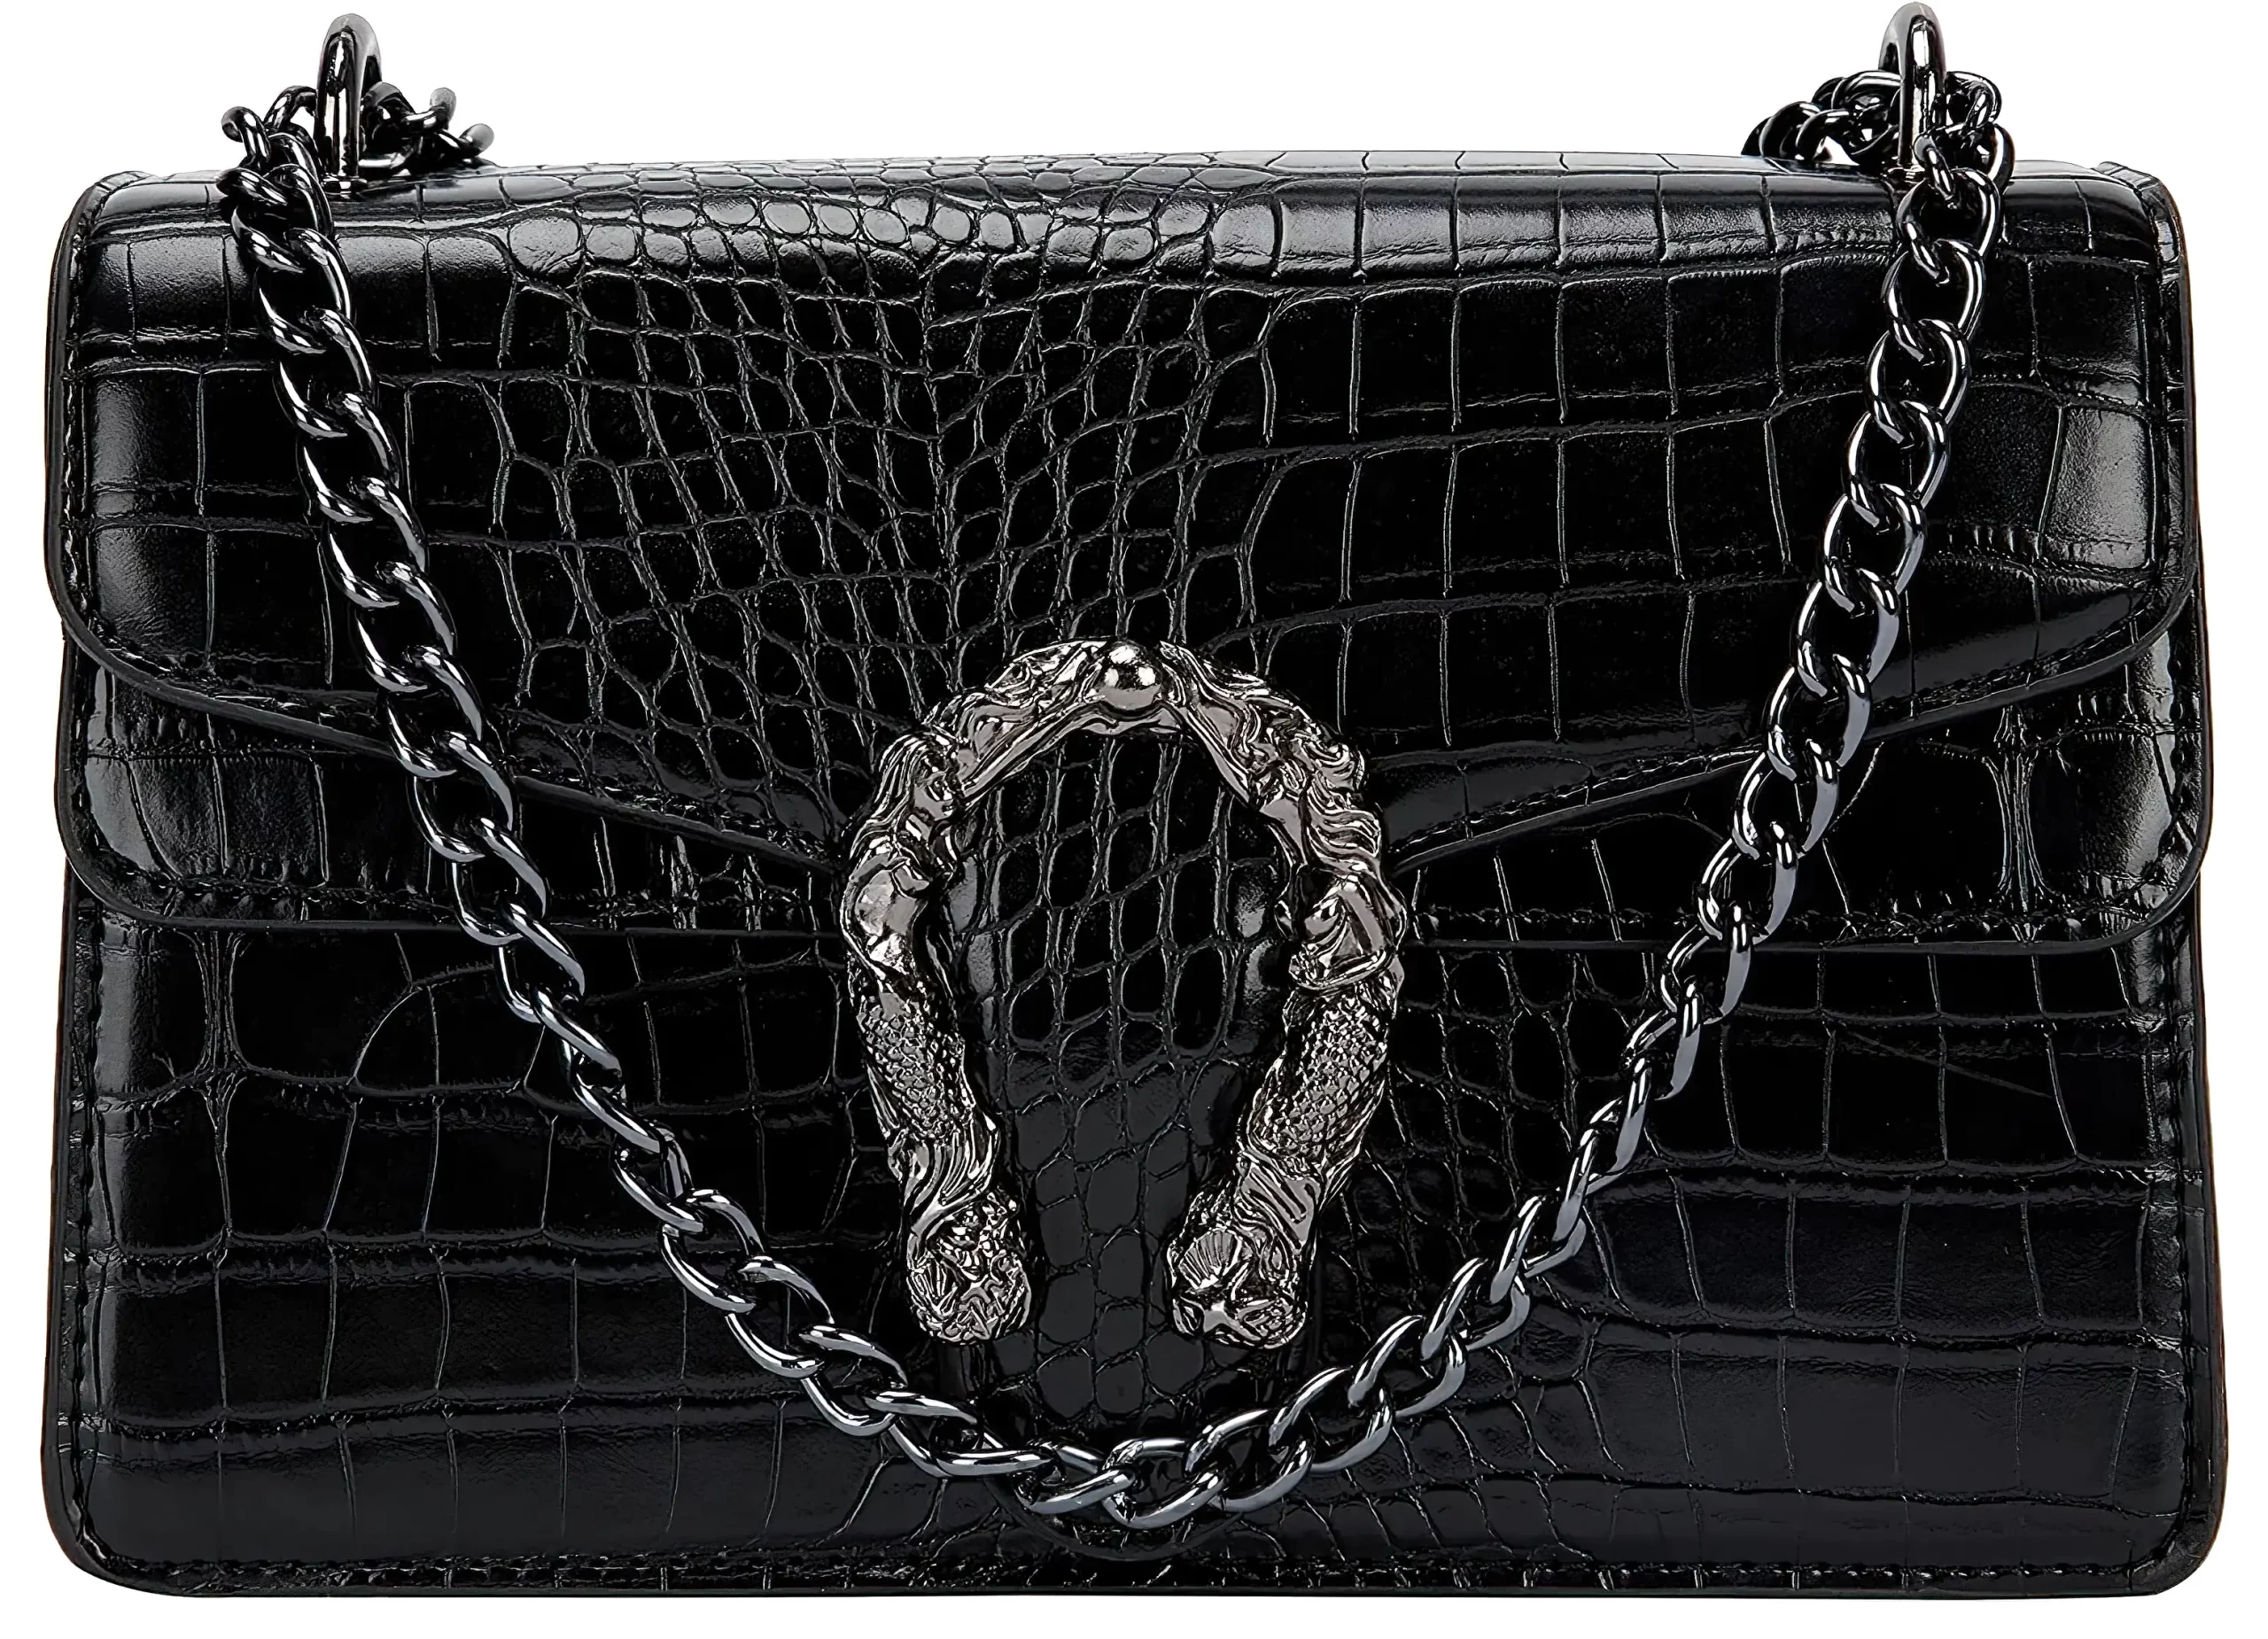 Aiqudou Trendy Chain Strap Shoulder Handbag